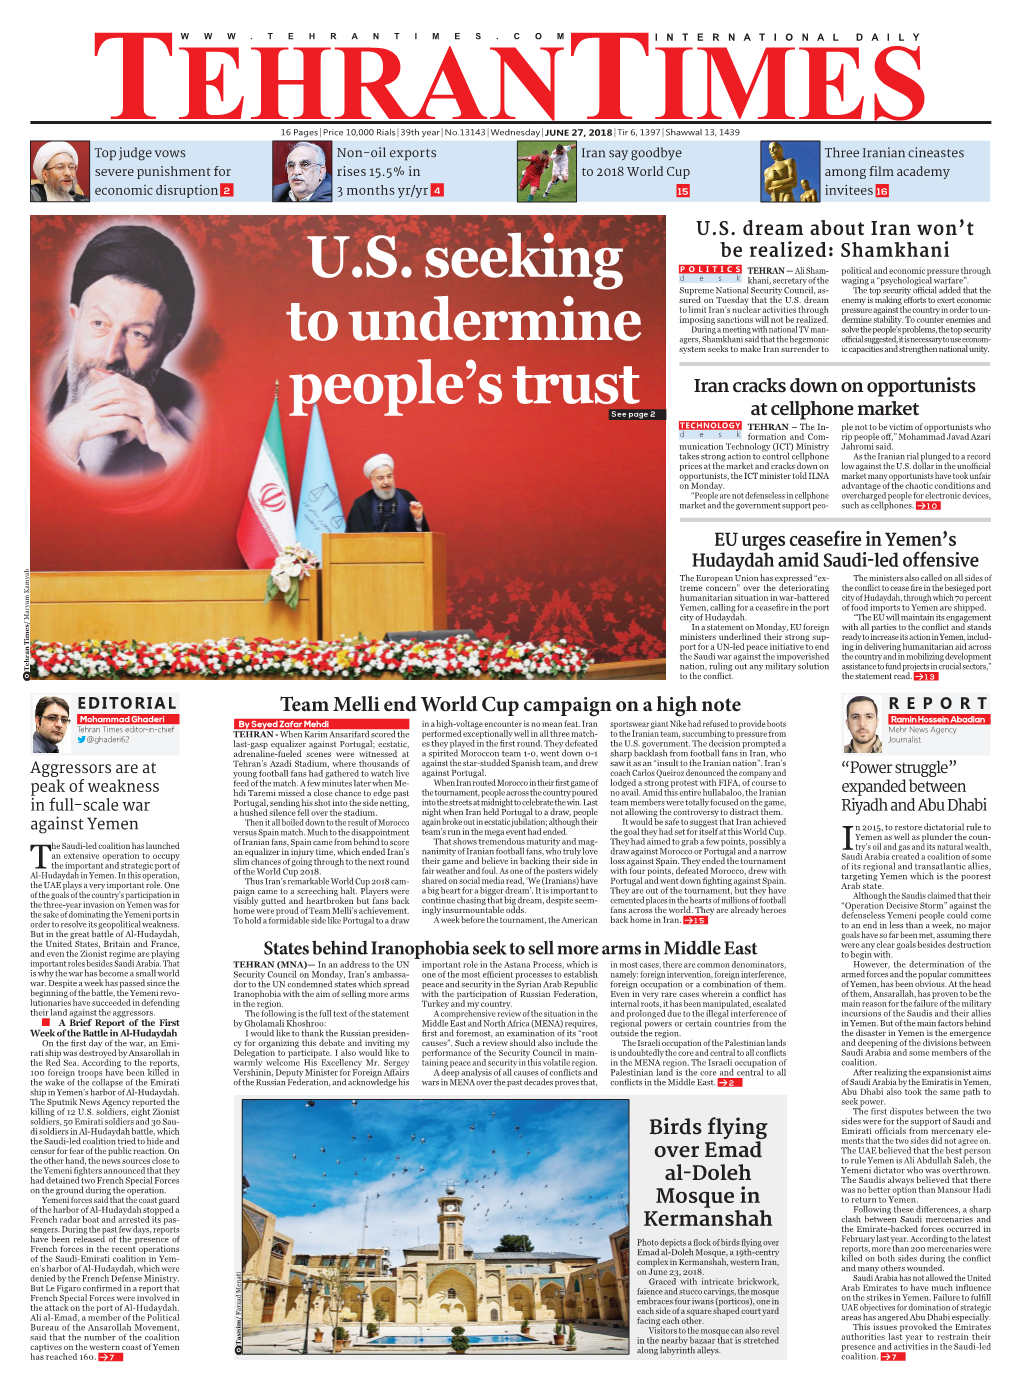 U.S. Seeking to Undermine People's Trust